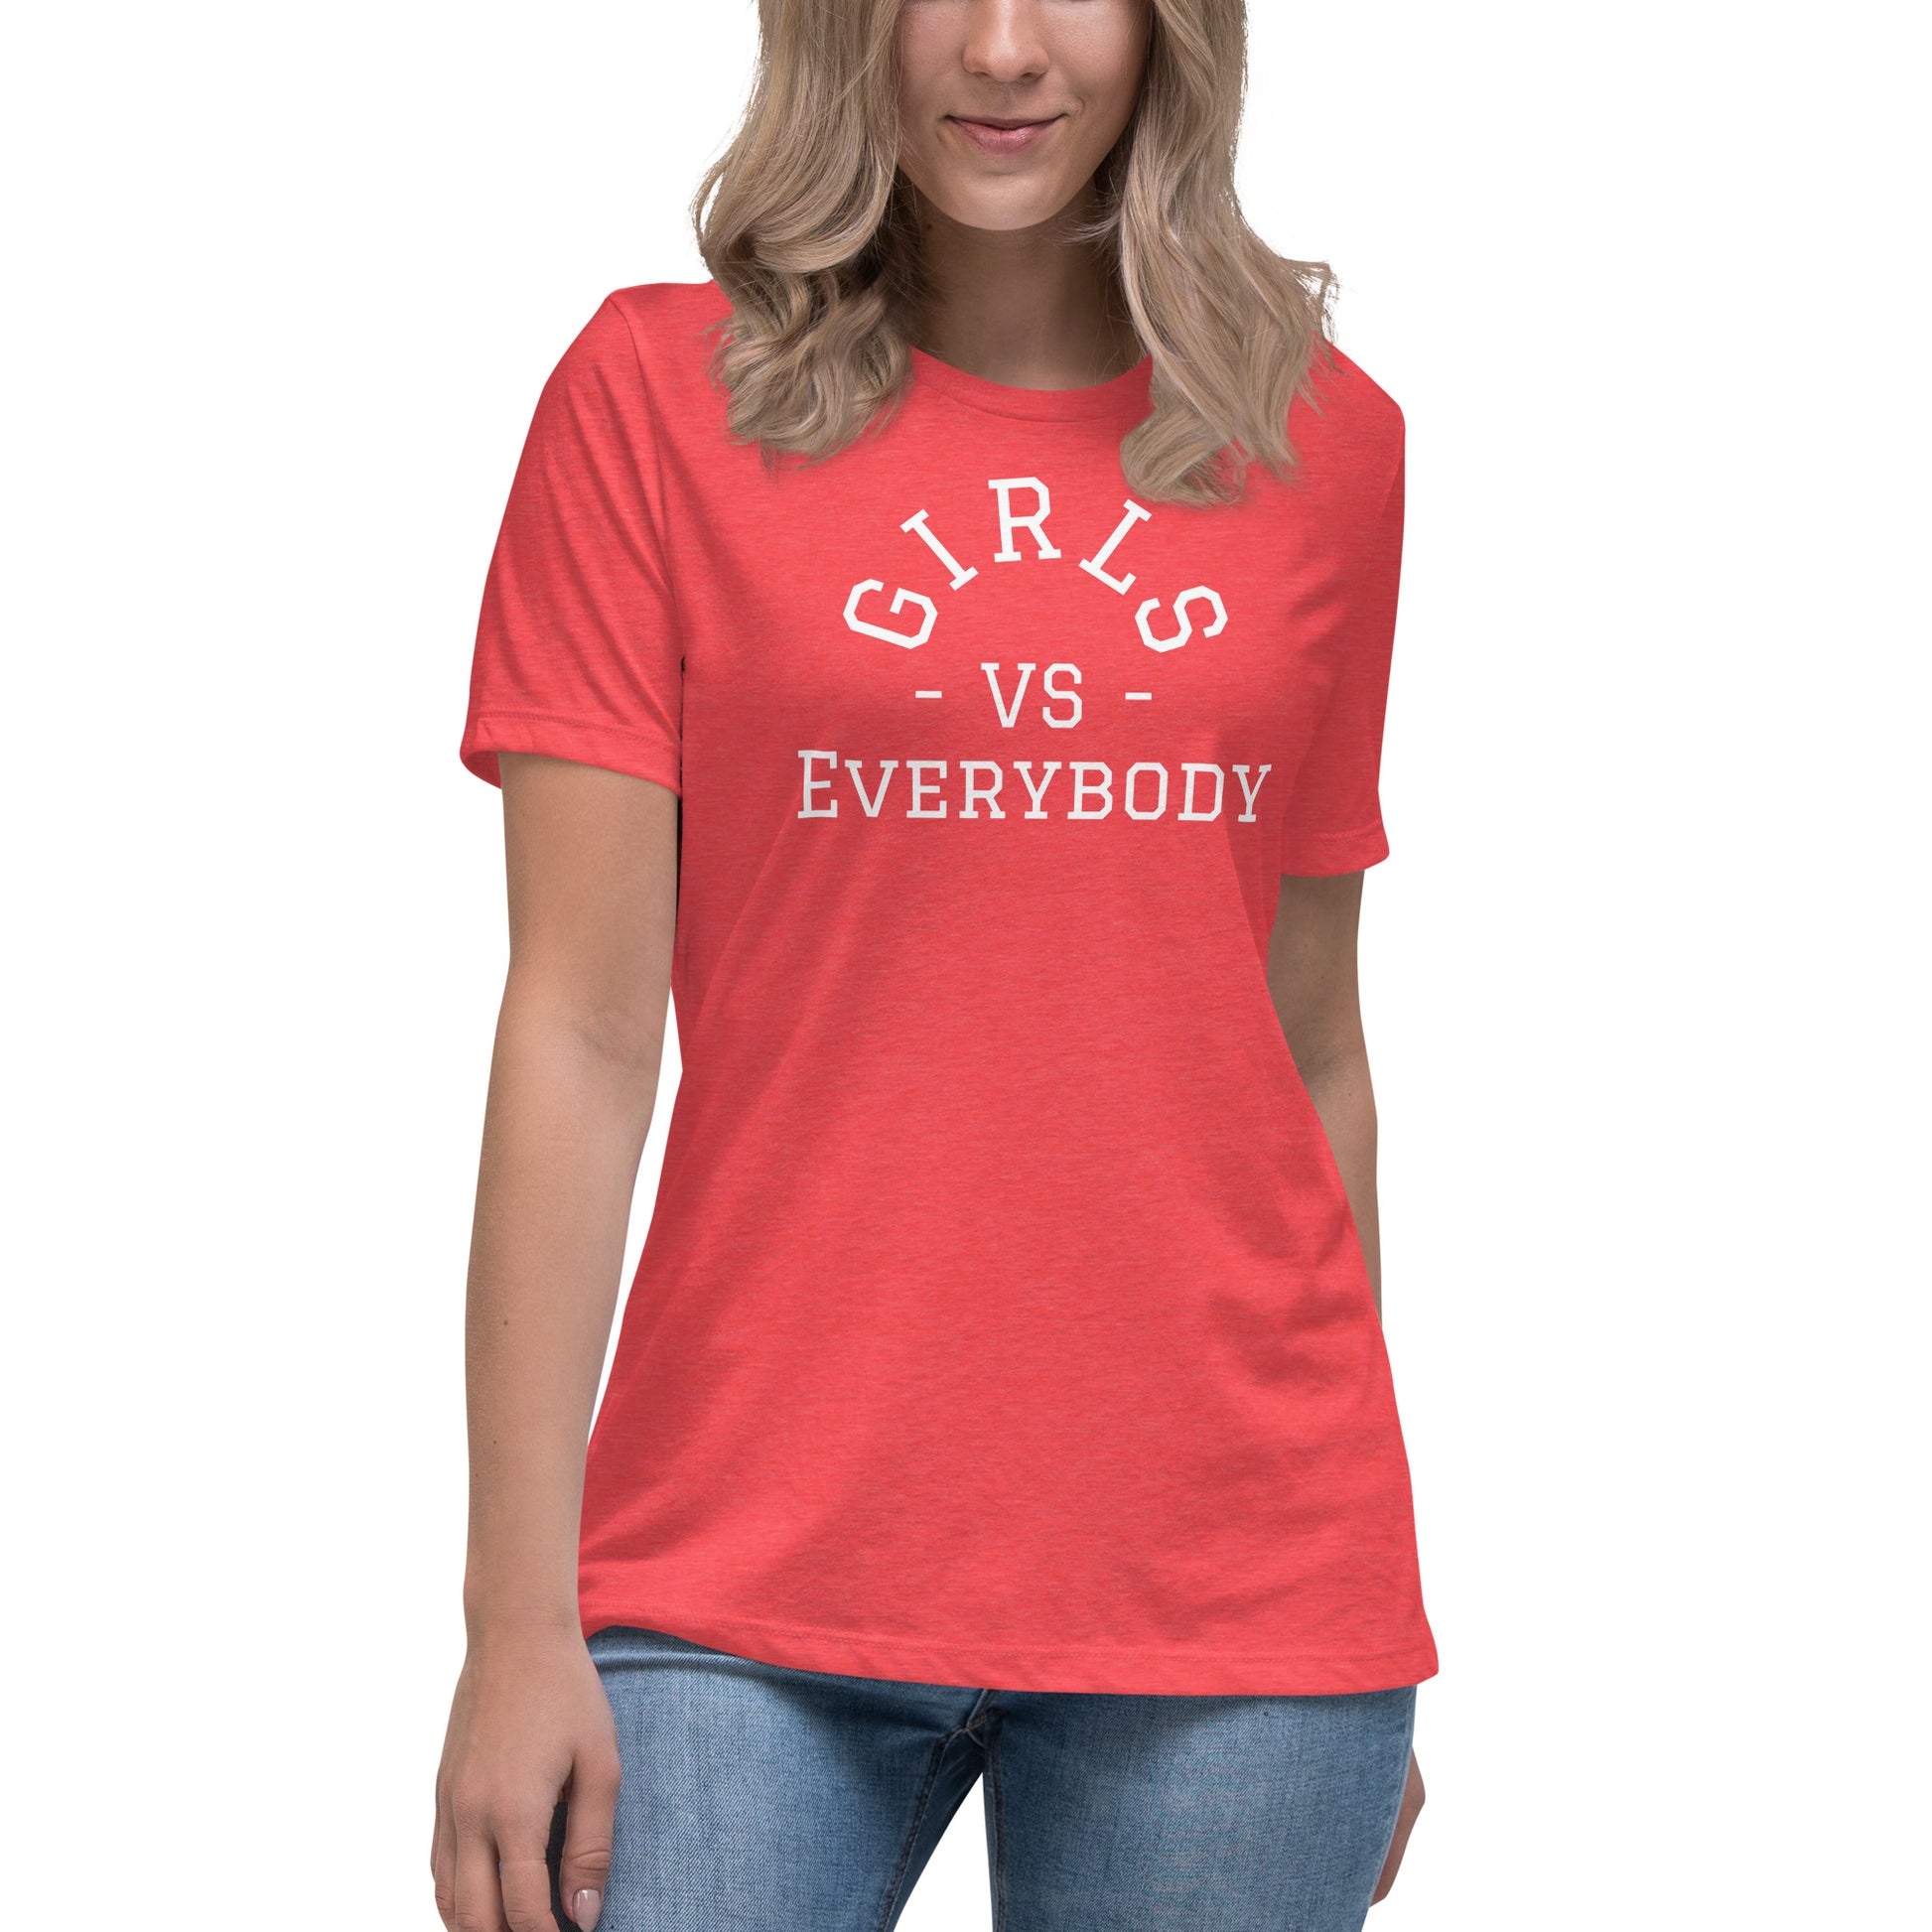 Best women's heather red short sleeve graphic tee shirt that says "Girls VS Everybody"